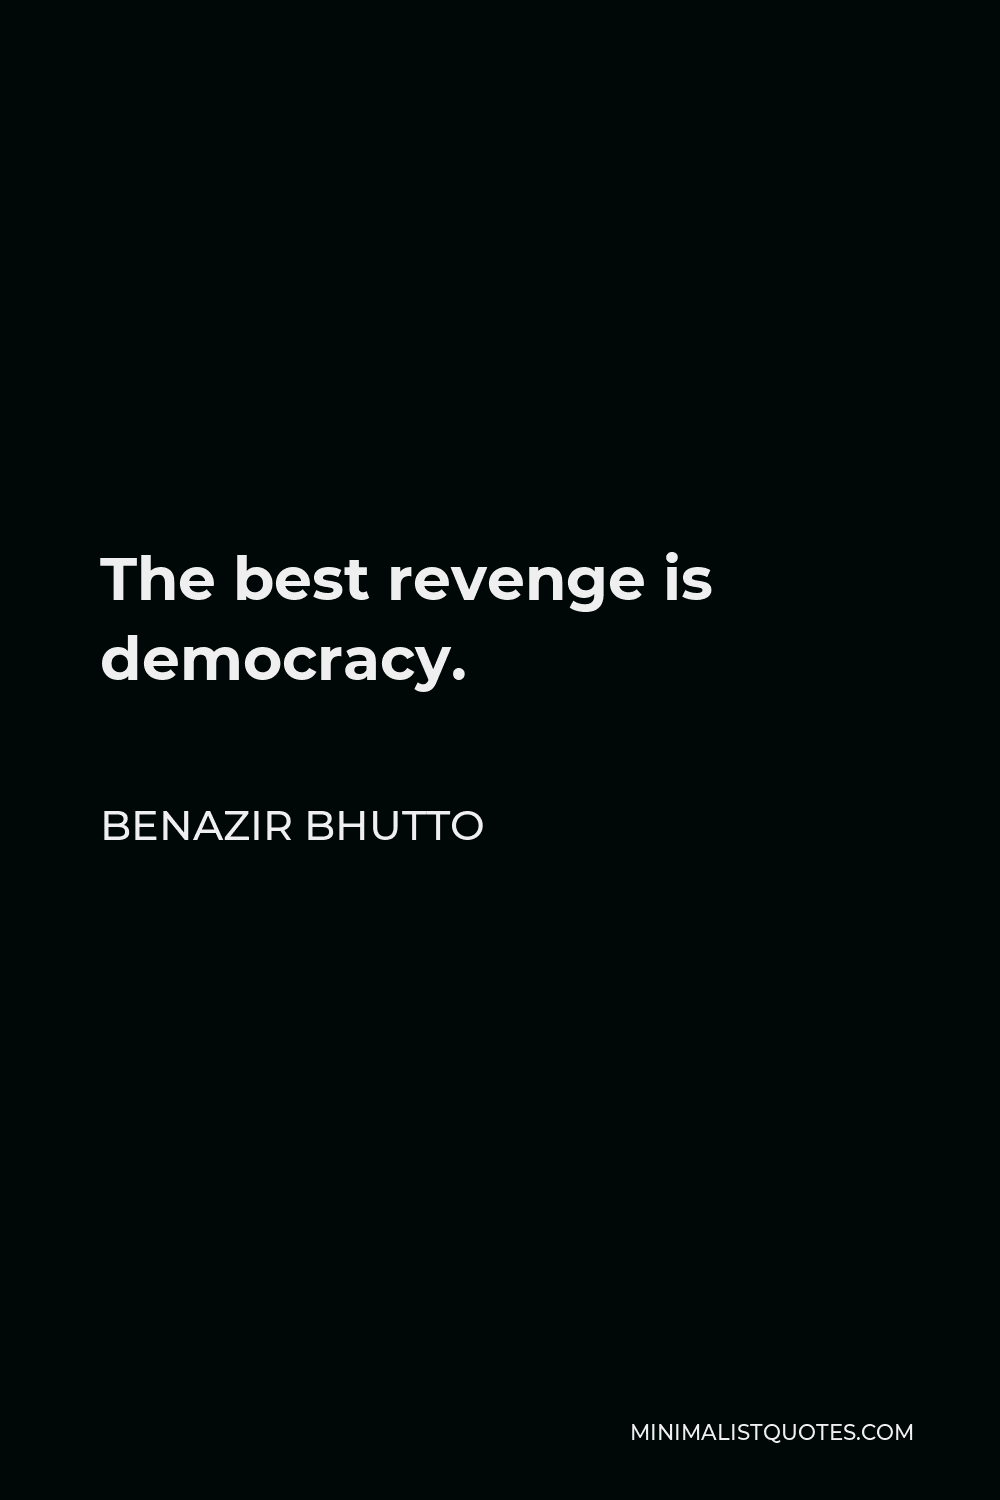 Benazir Bhutto Quote - The best revenge is democracy.